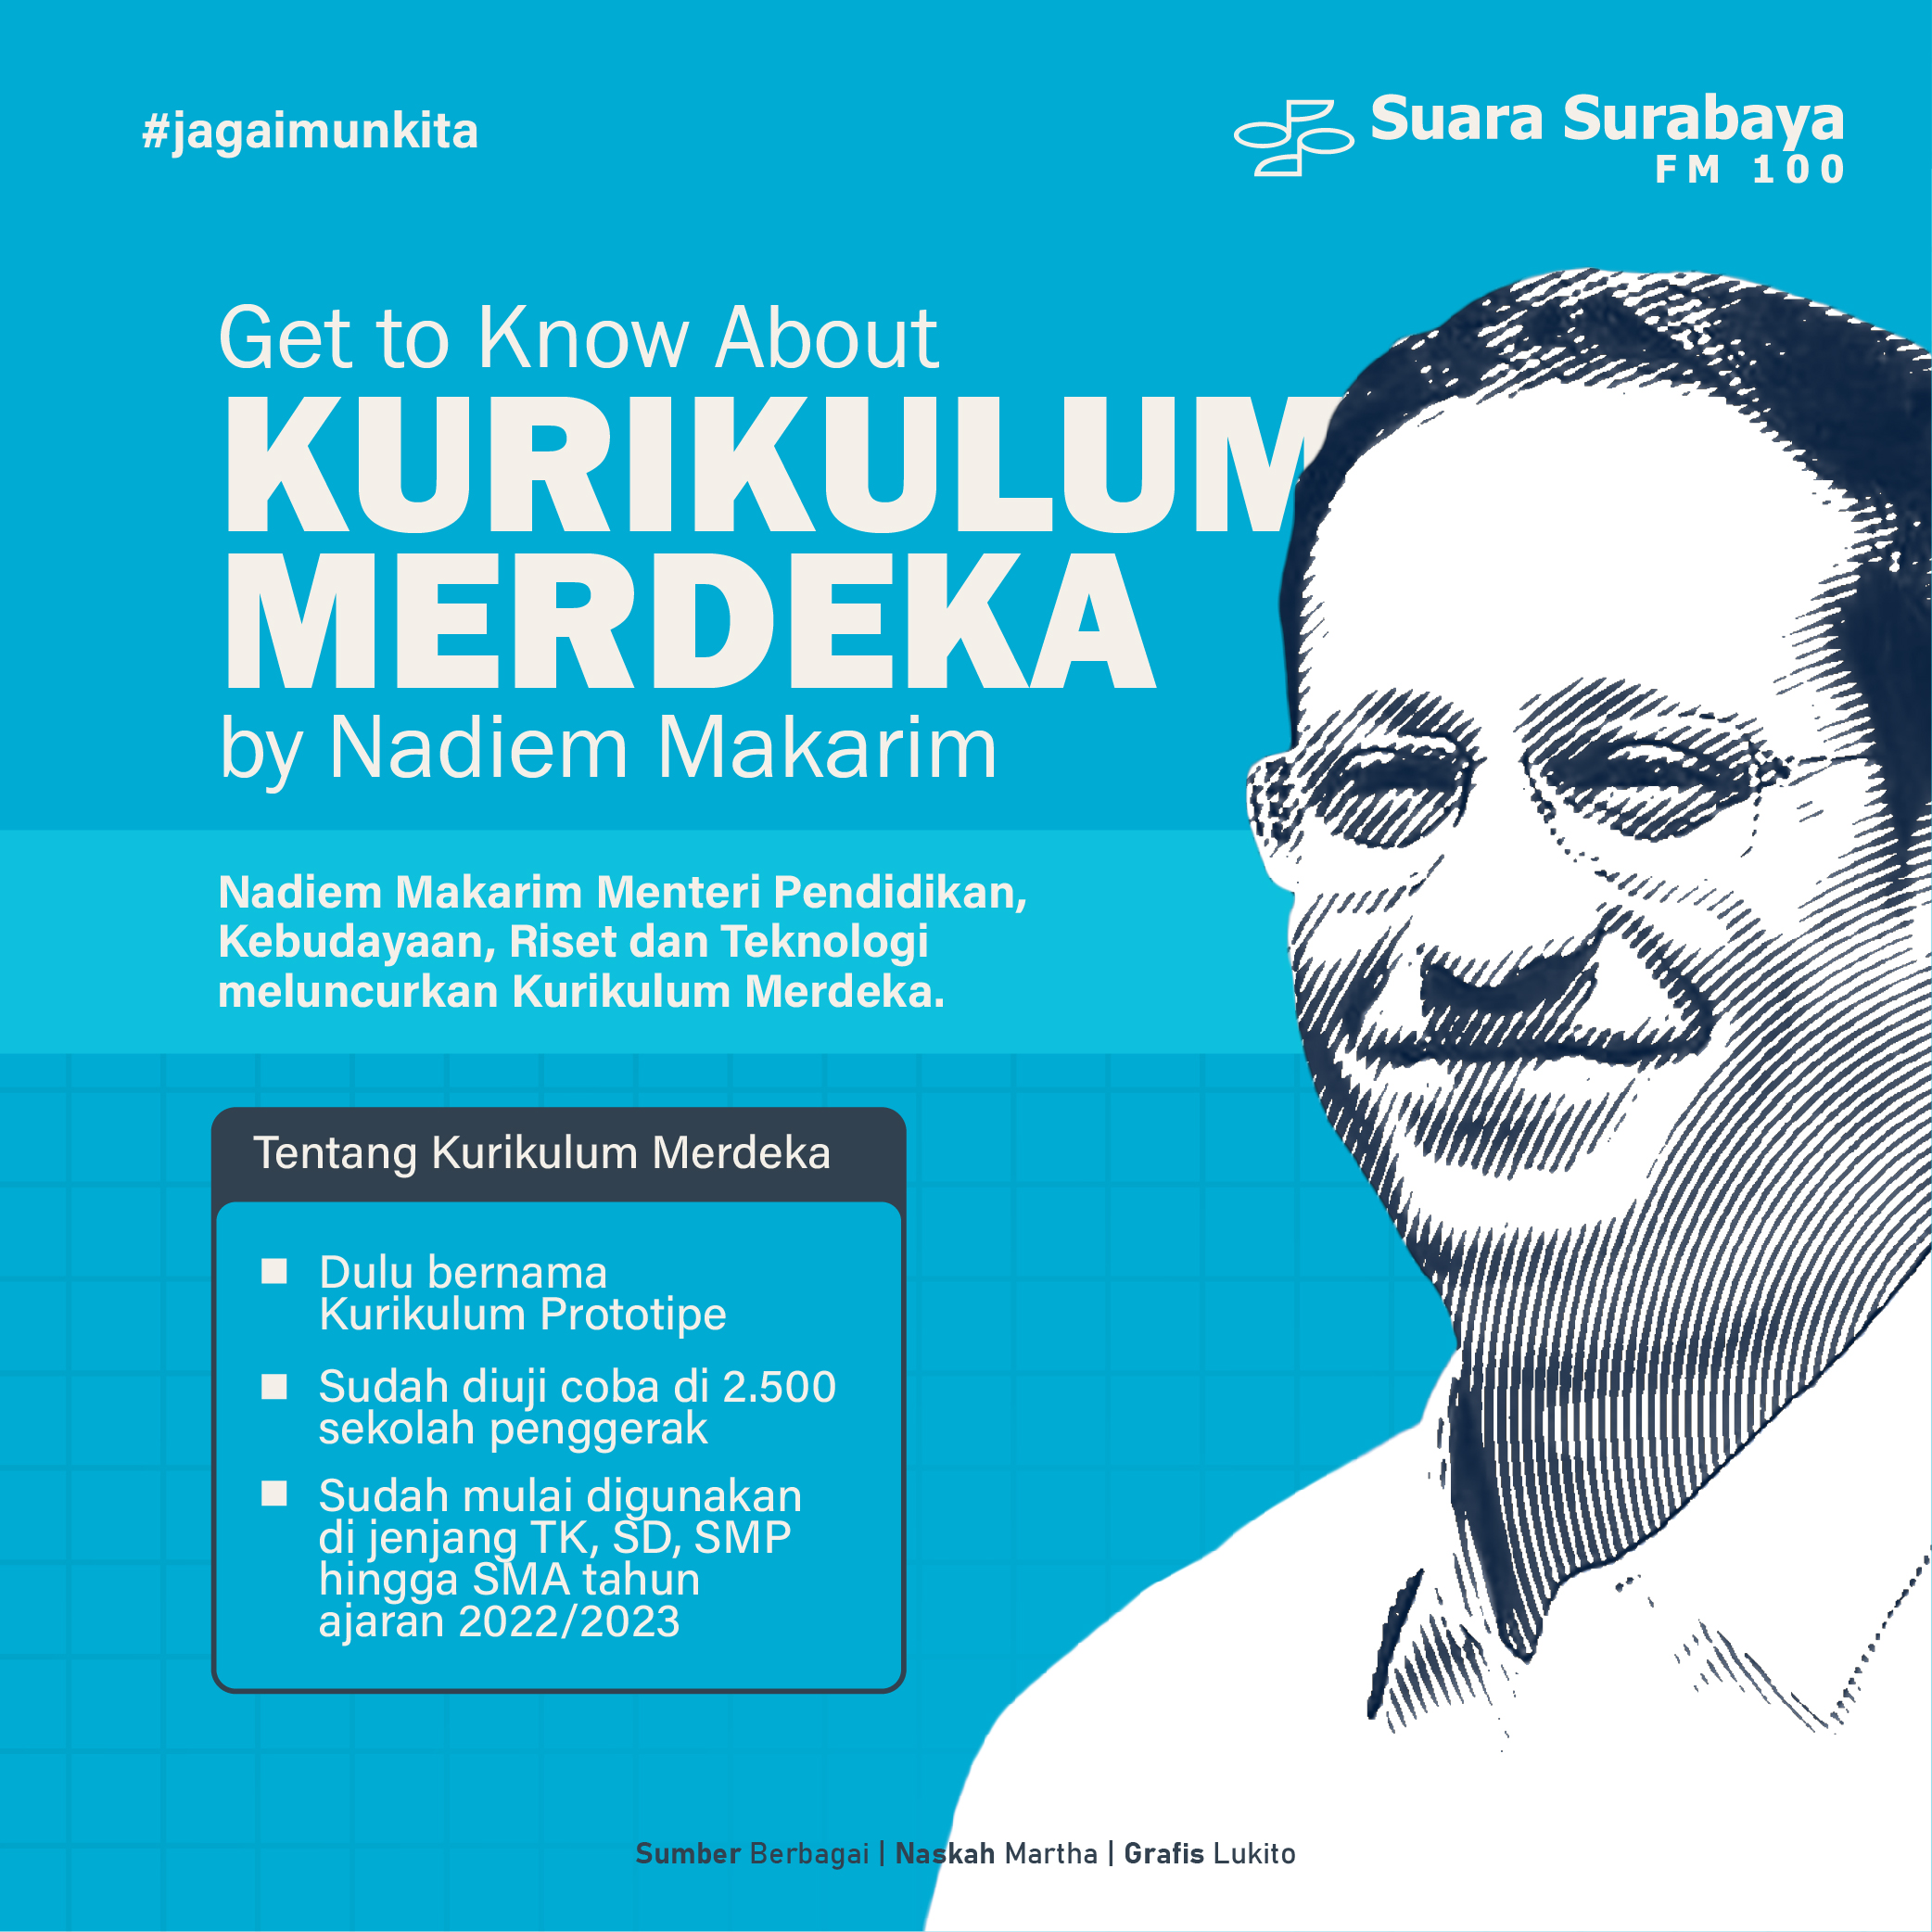 Get to Know About Kurikulum Merdeka by Nadiem Makarim